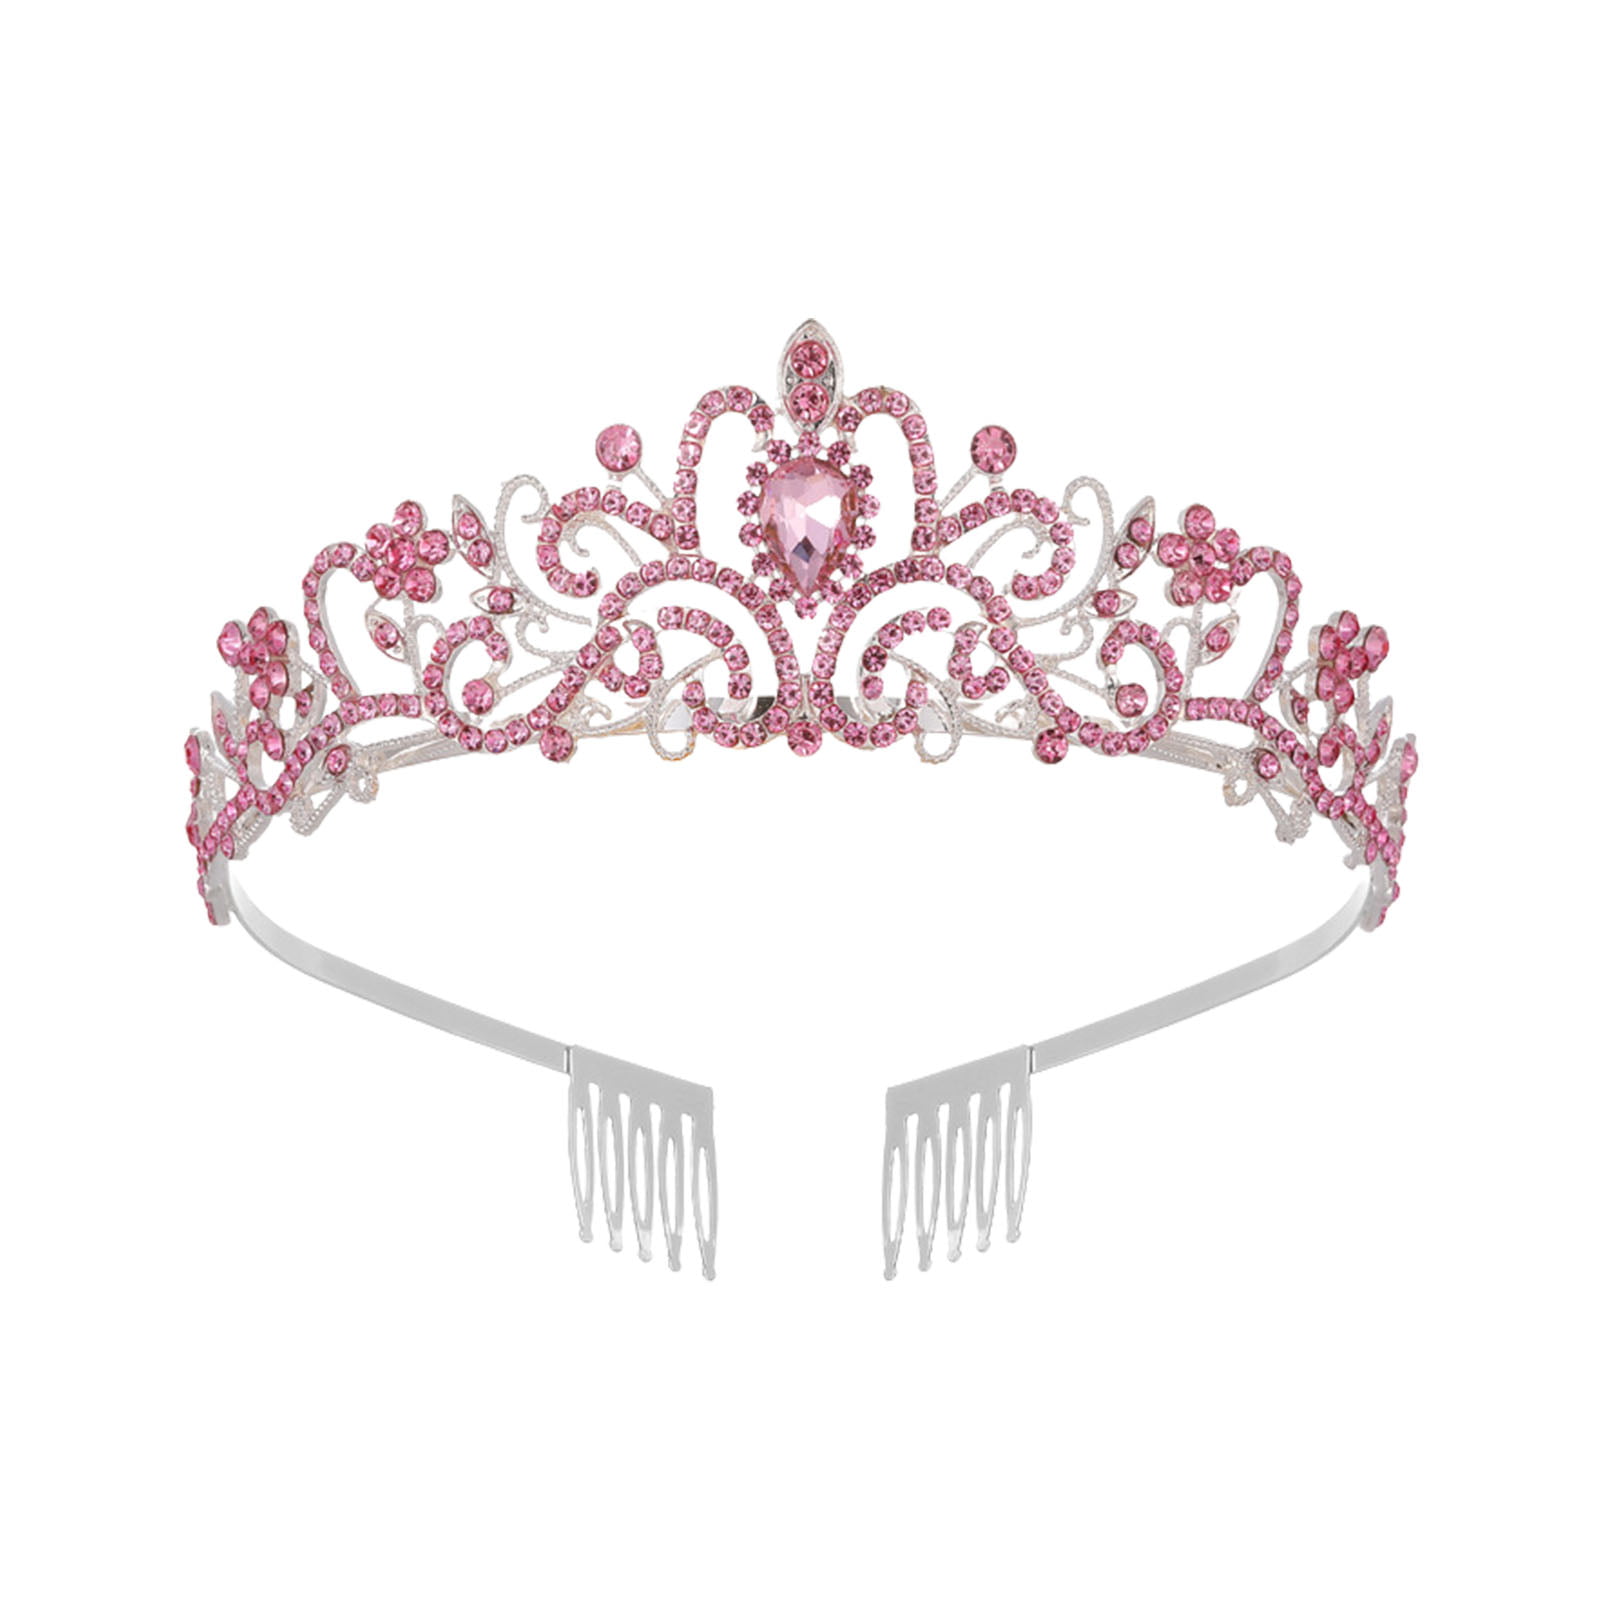 Details about   Diadem Rhinestone Tiaras Crowns Headbands Bride Hair Jewelry Women Accessories 